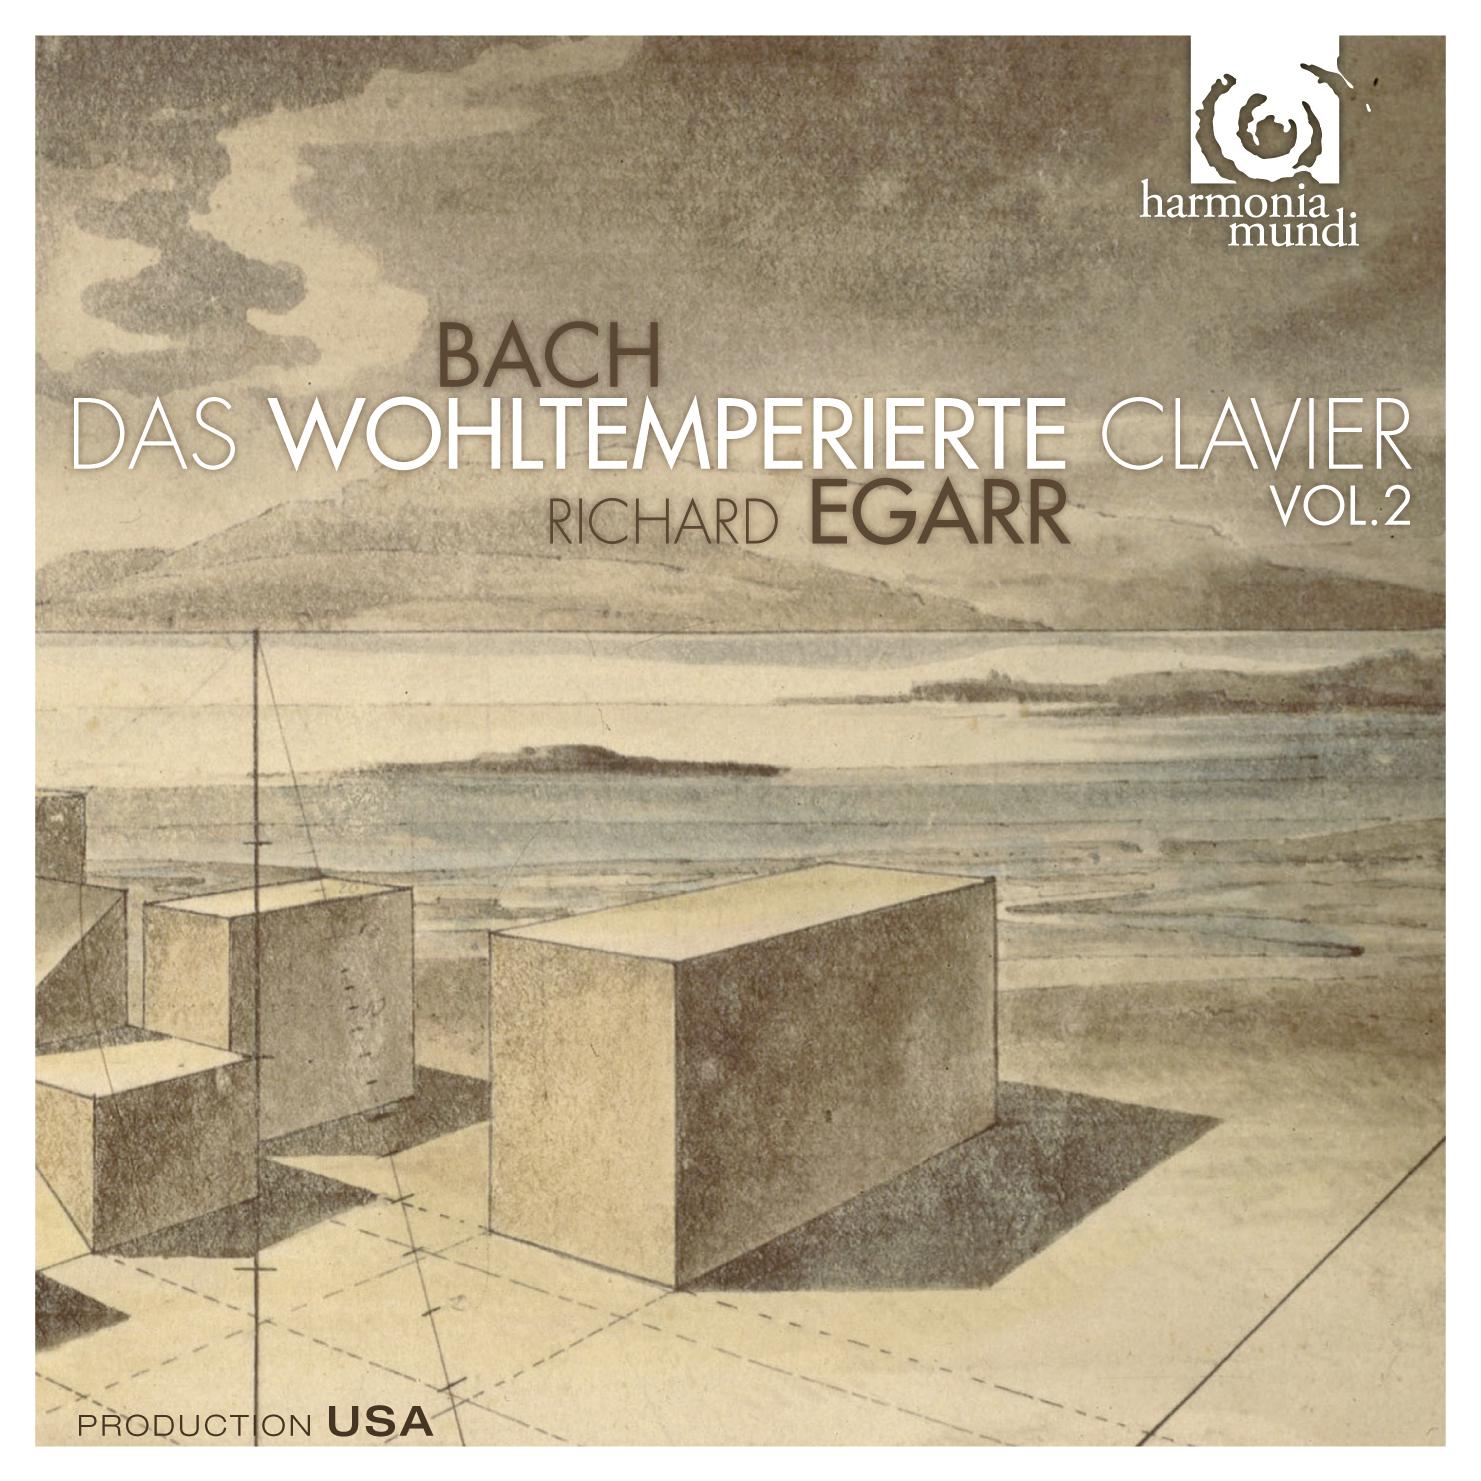 Well-Tempered Clavier, Book II, BWV 870-893: Prelude V in D Major, BWV 874